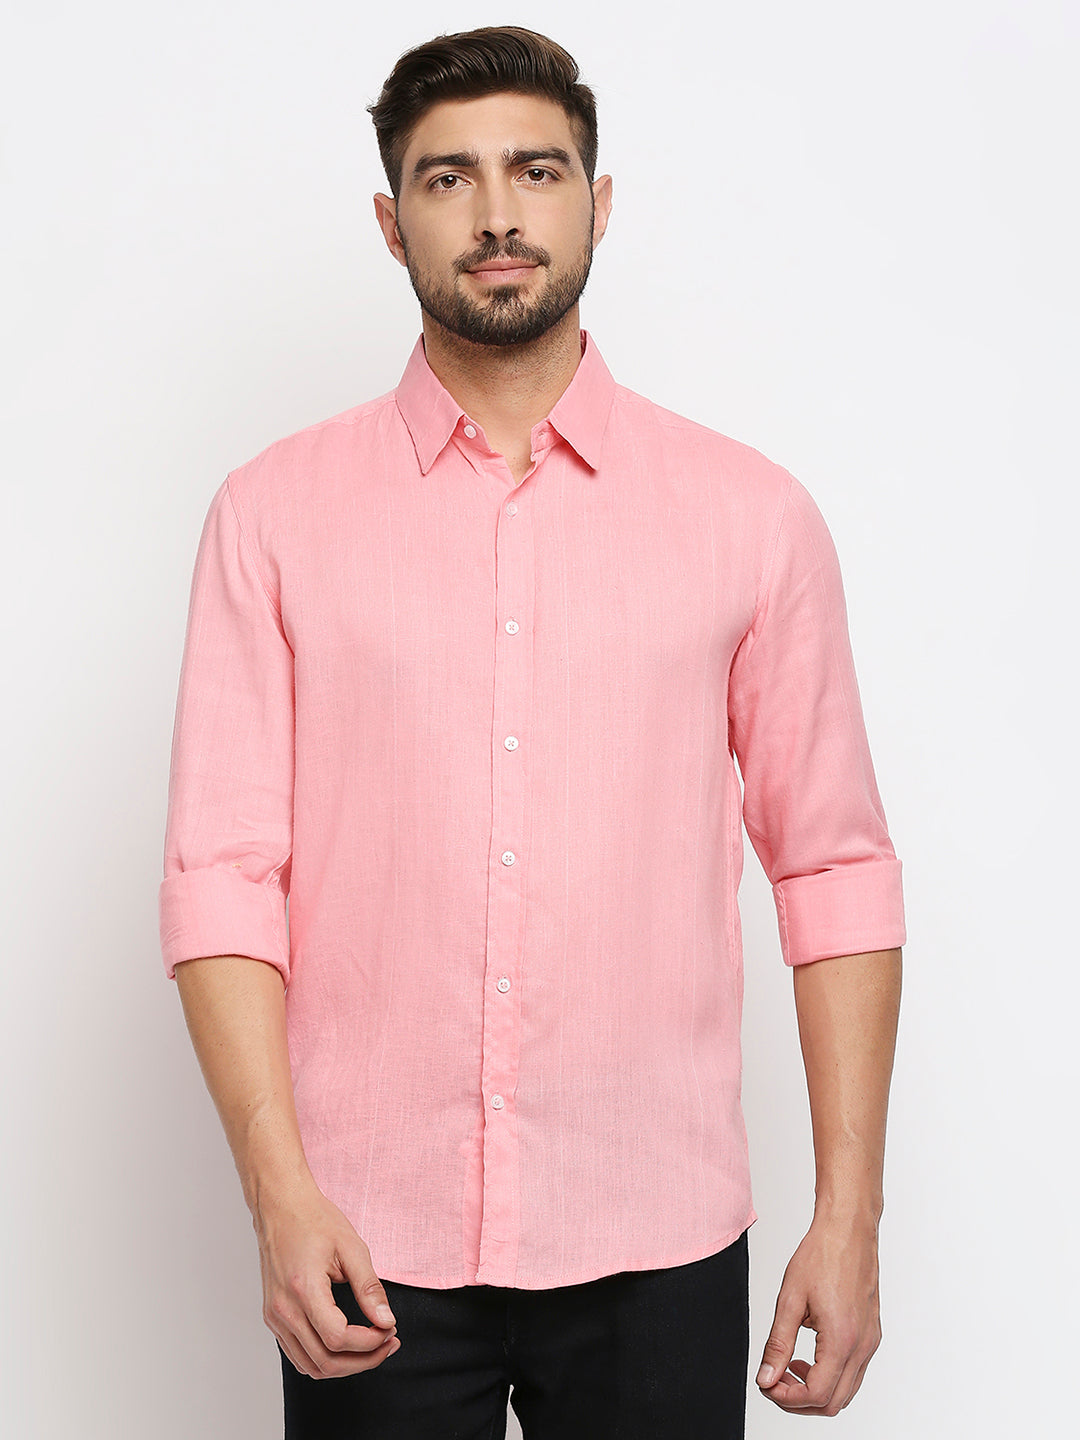 Indulge Excel Linen Pink Shirt